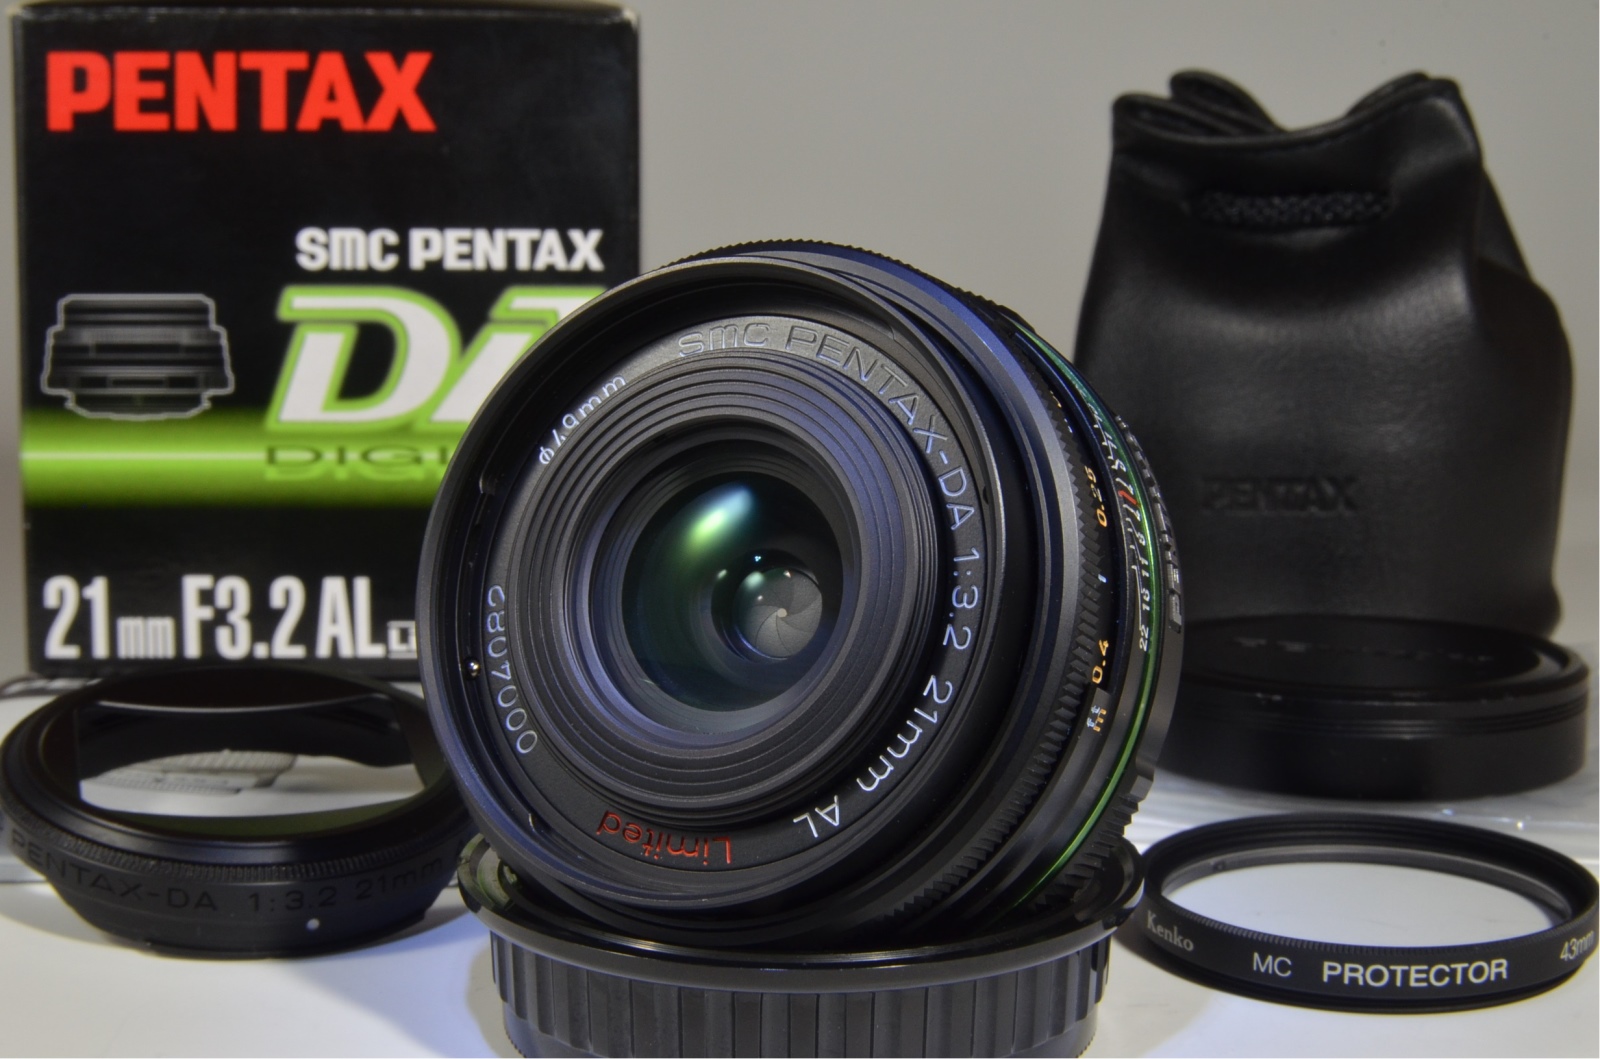 PENTAX smc DA 21mm F3.2 AL Limited #a0197 – SuperB JAPAN CAMERA